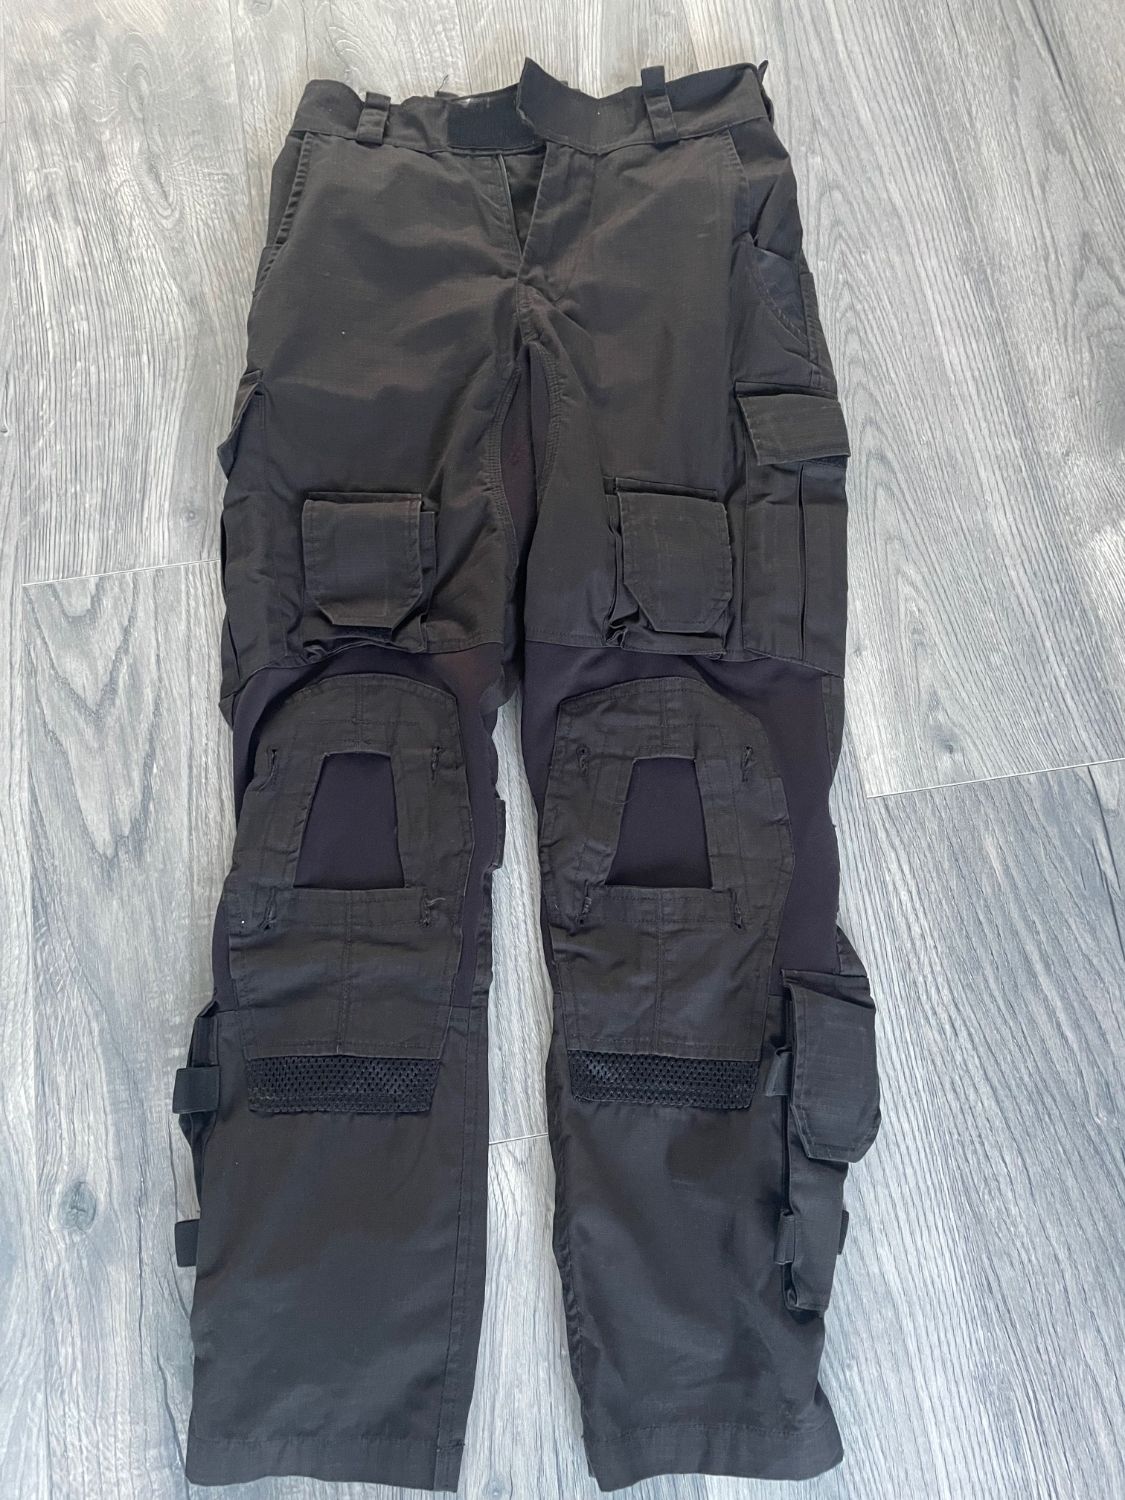 Arktis ranger Trousers Black - Gear - Airsoft Forums UK